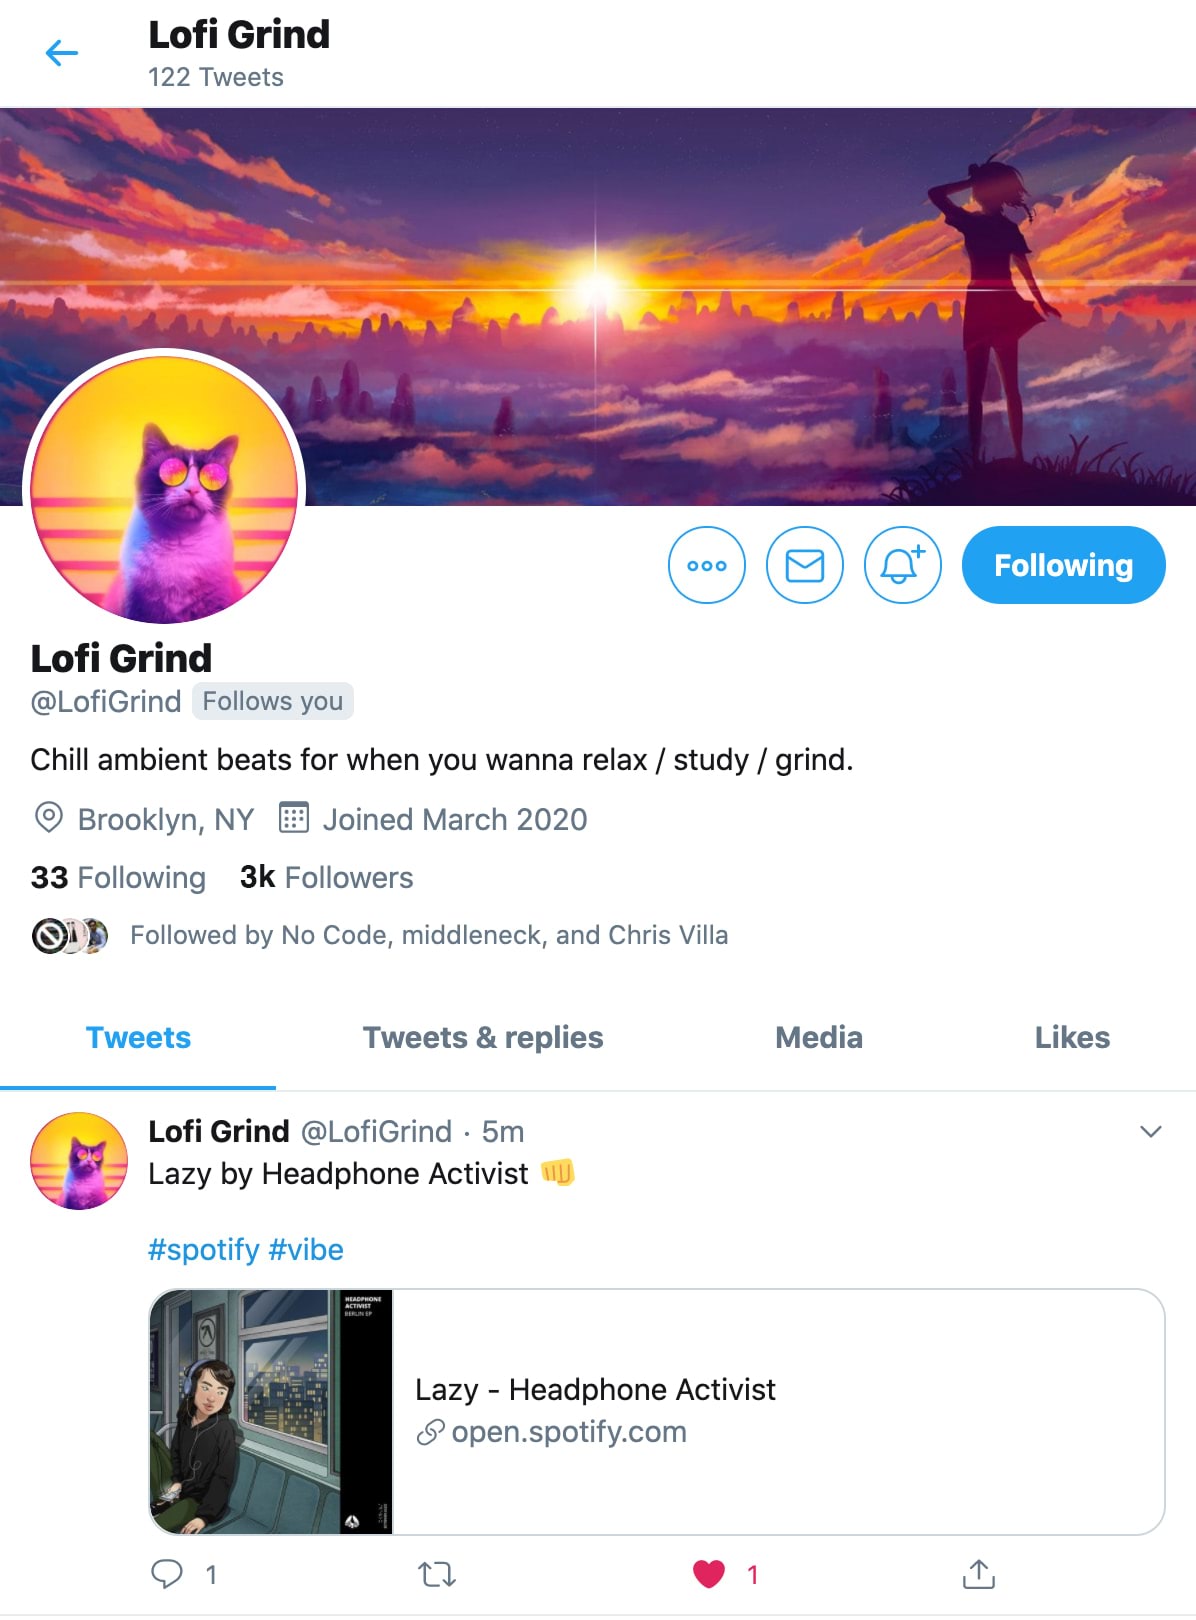 LofiGrind Twitter Account